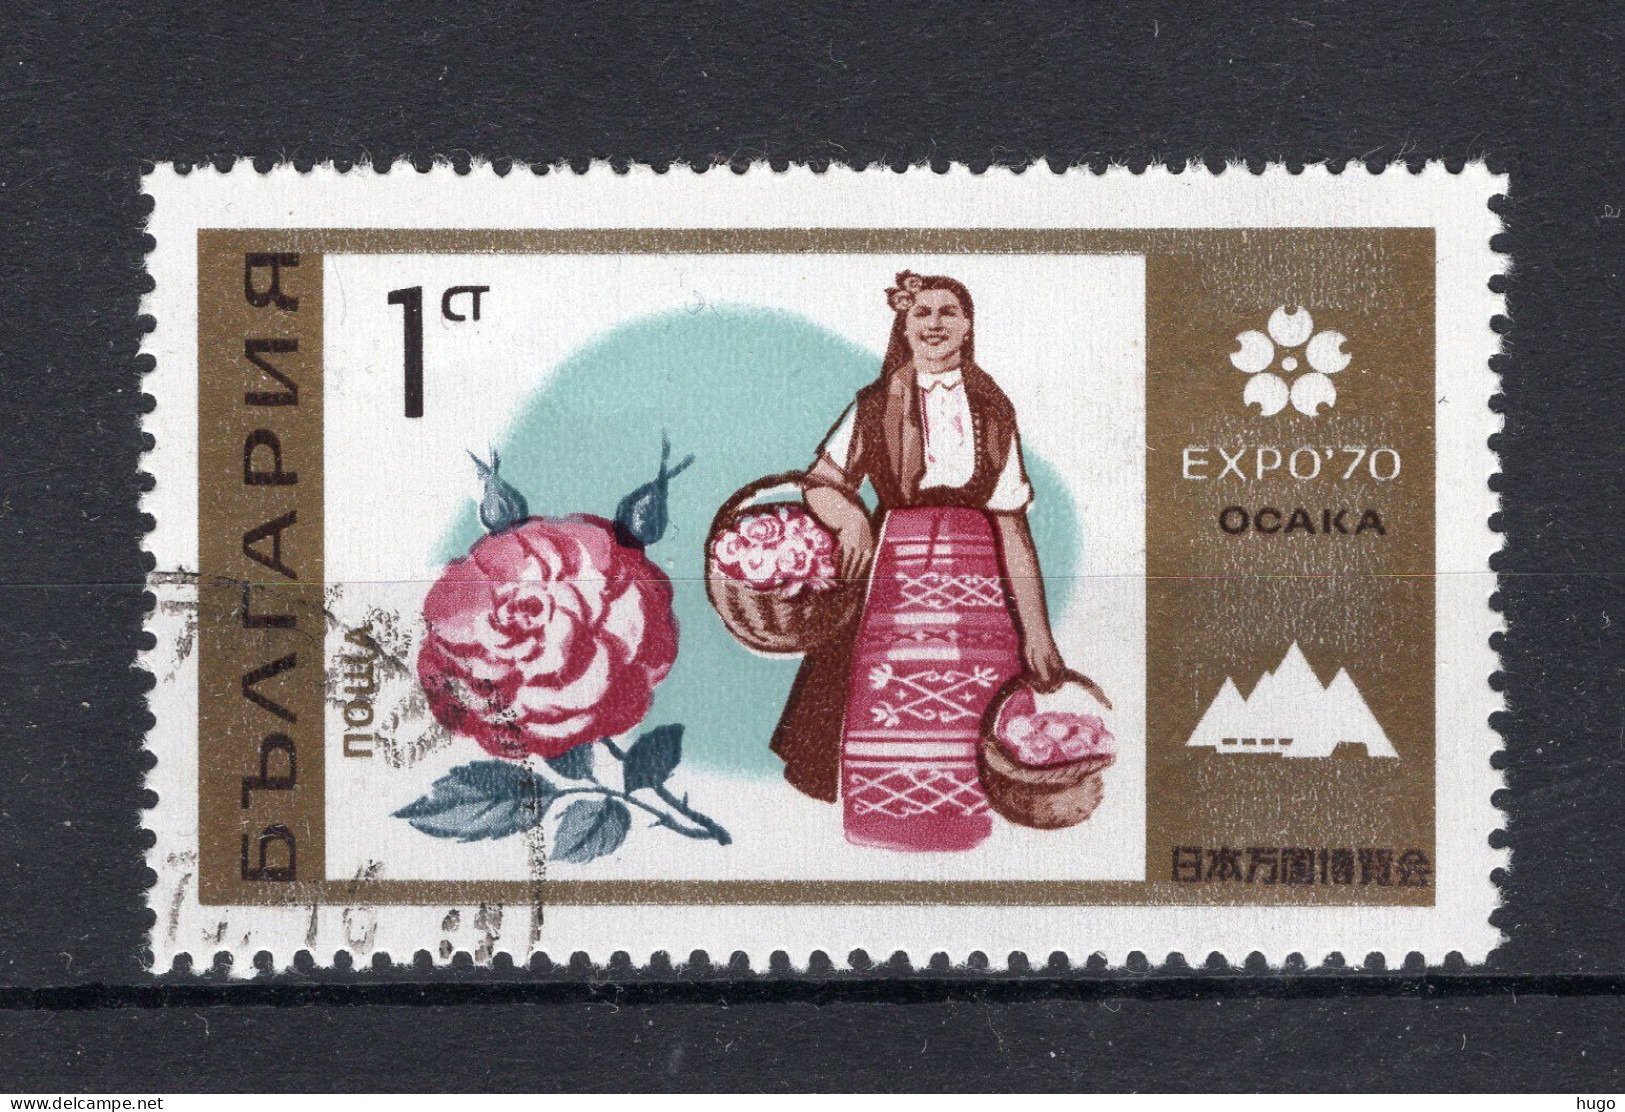 BULGARIJE Yt. 1786° Gestempeld 1970 - Used Stamps